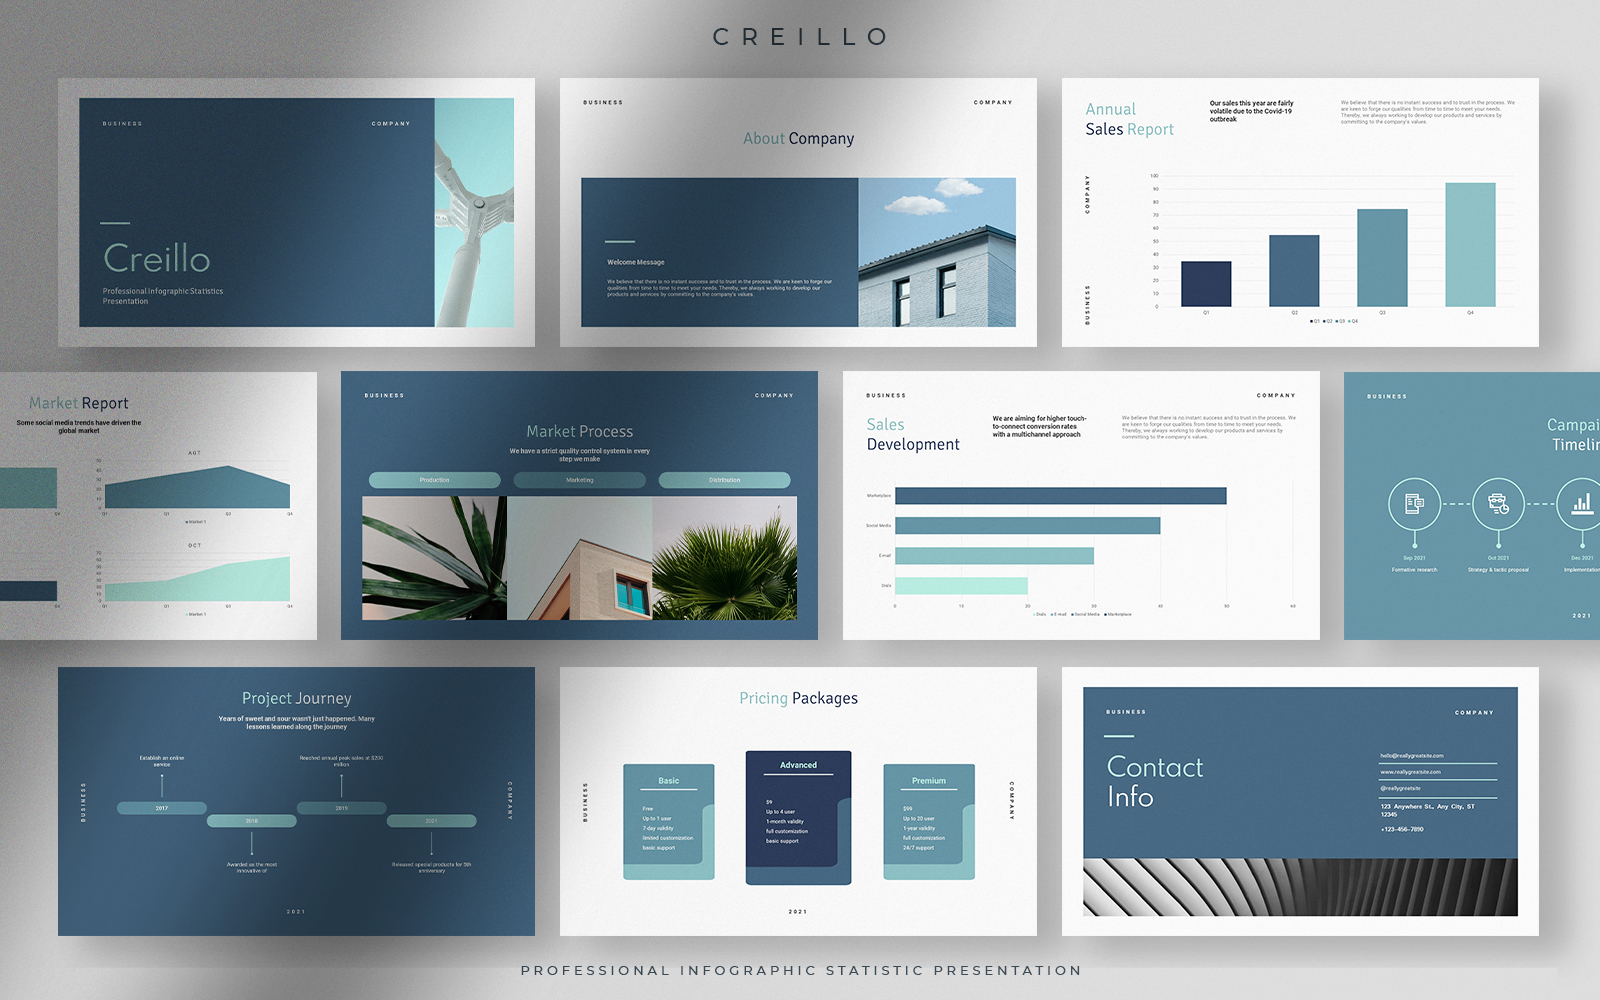 Creillo - Blue Lake Professional Infographic Statistics Presentation